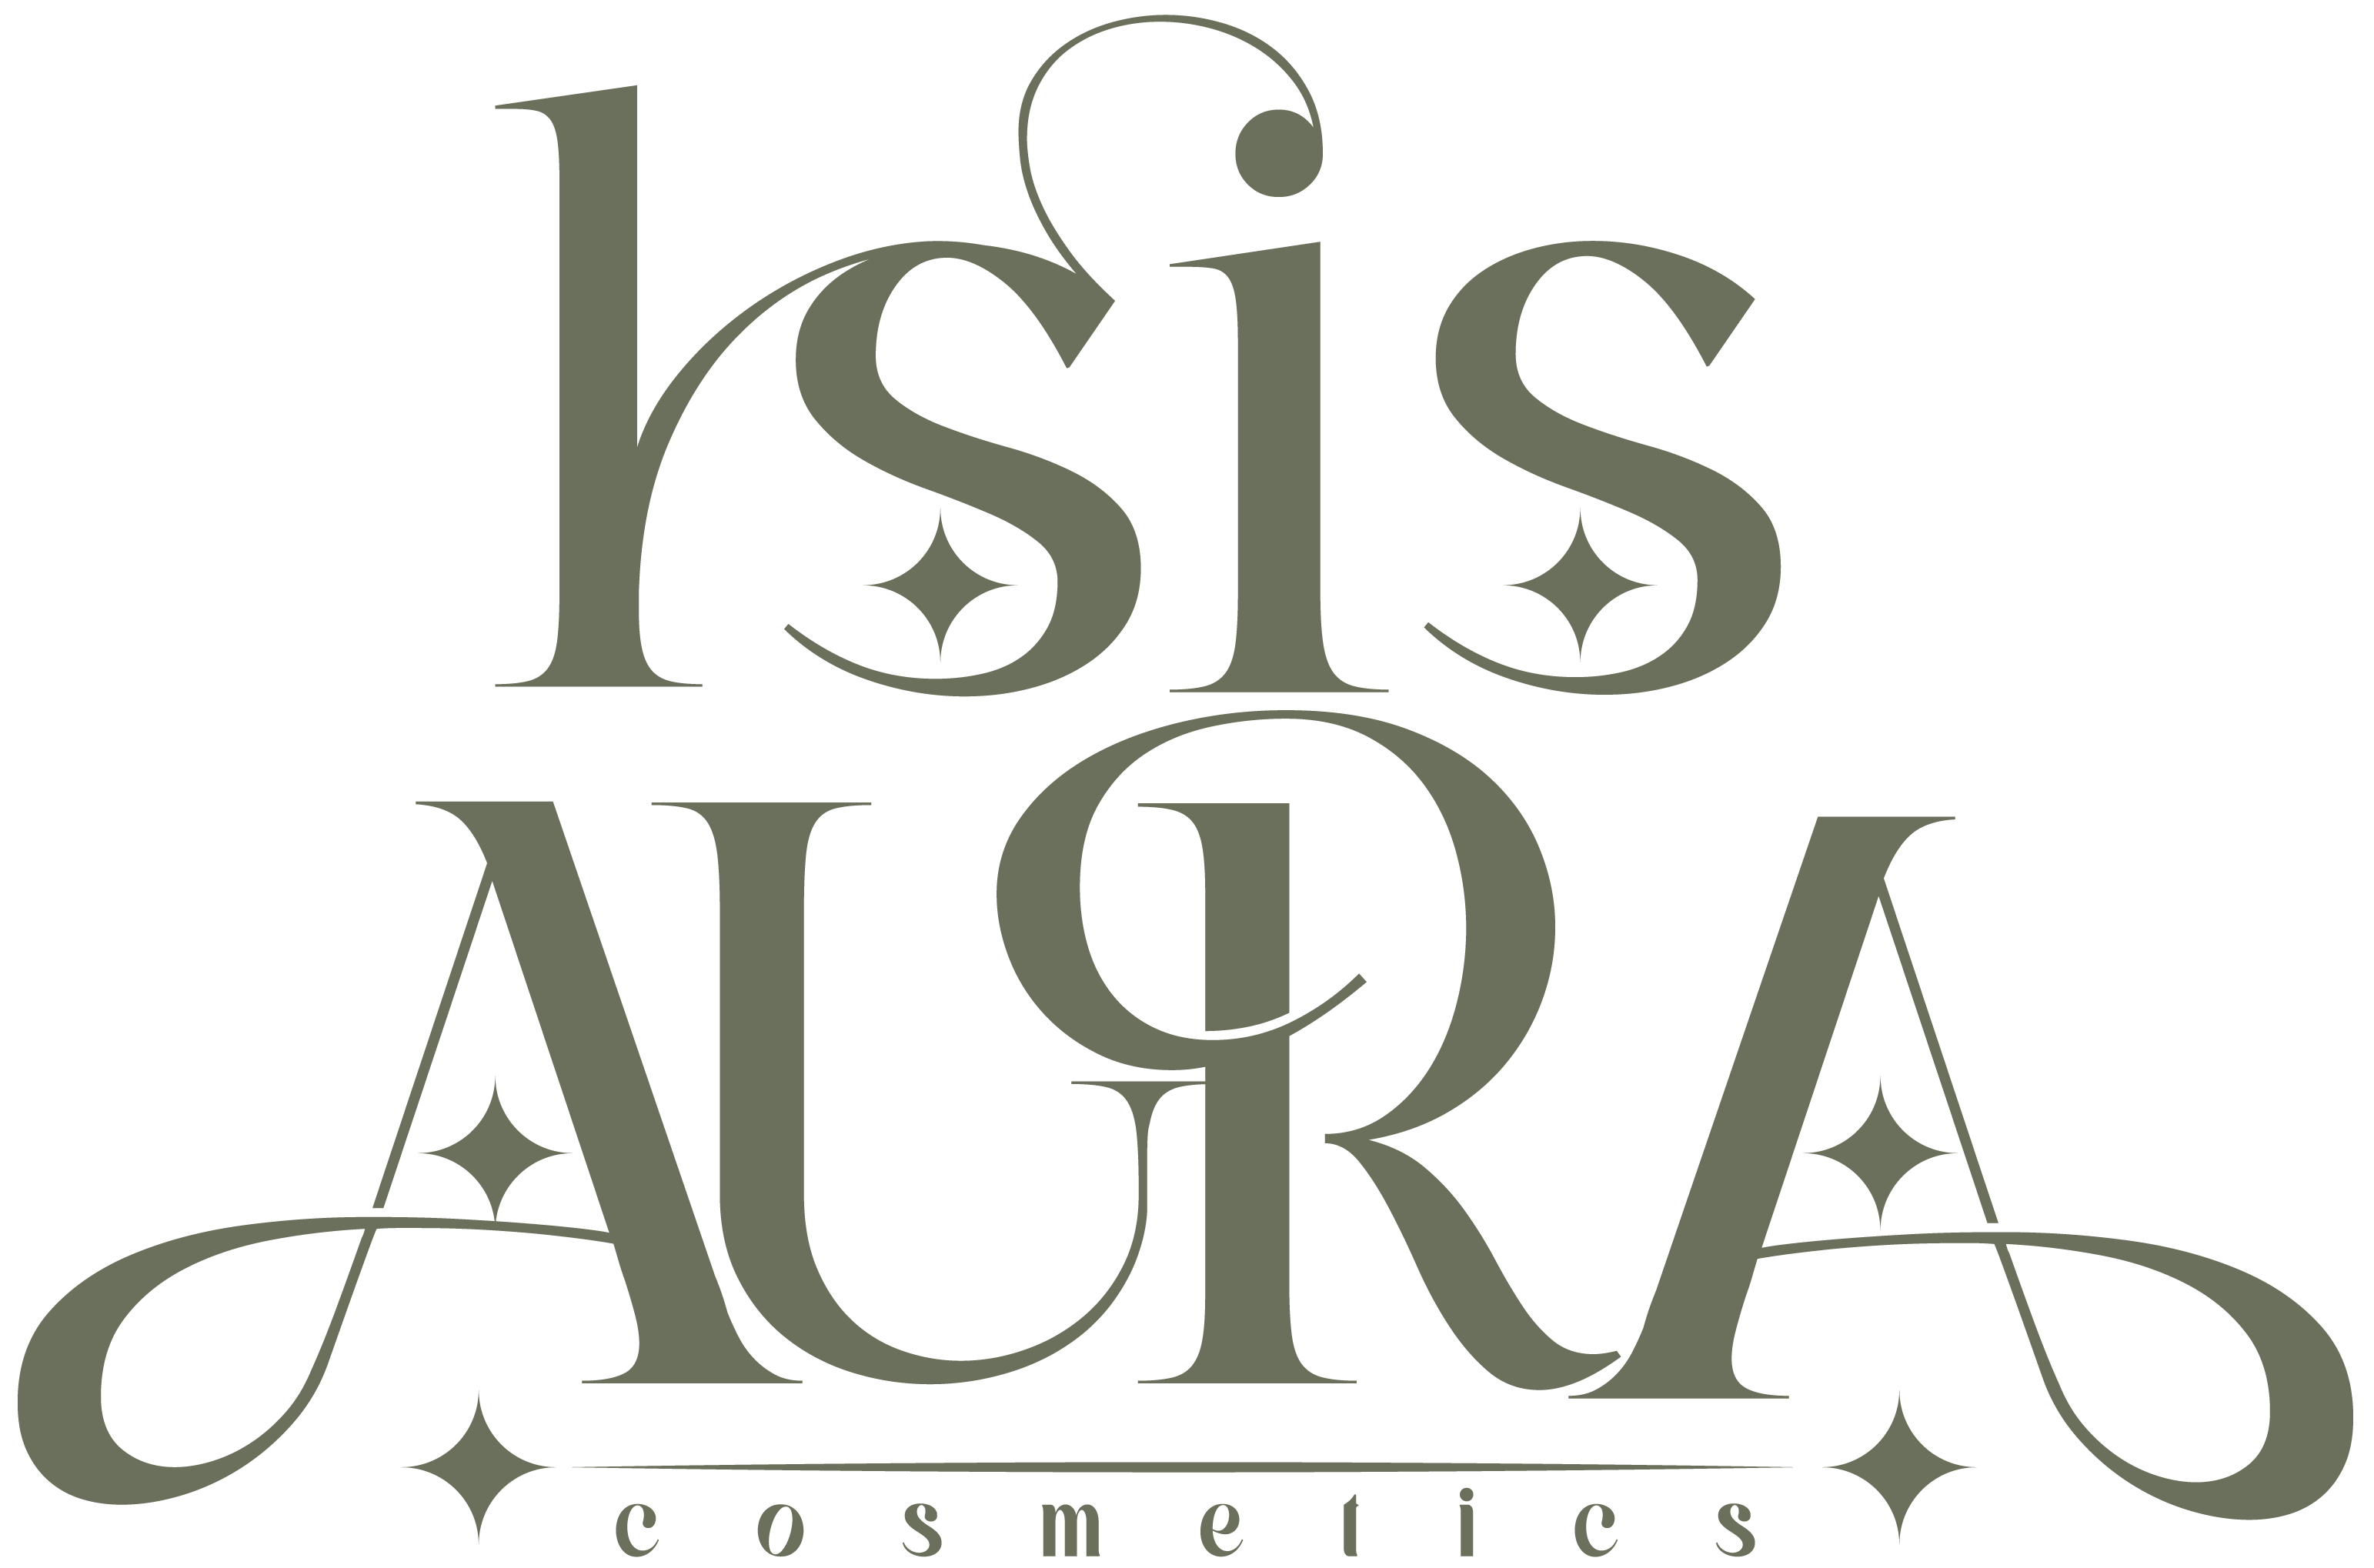 Isis aura